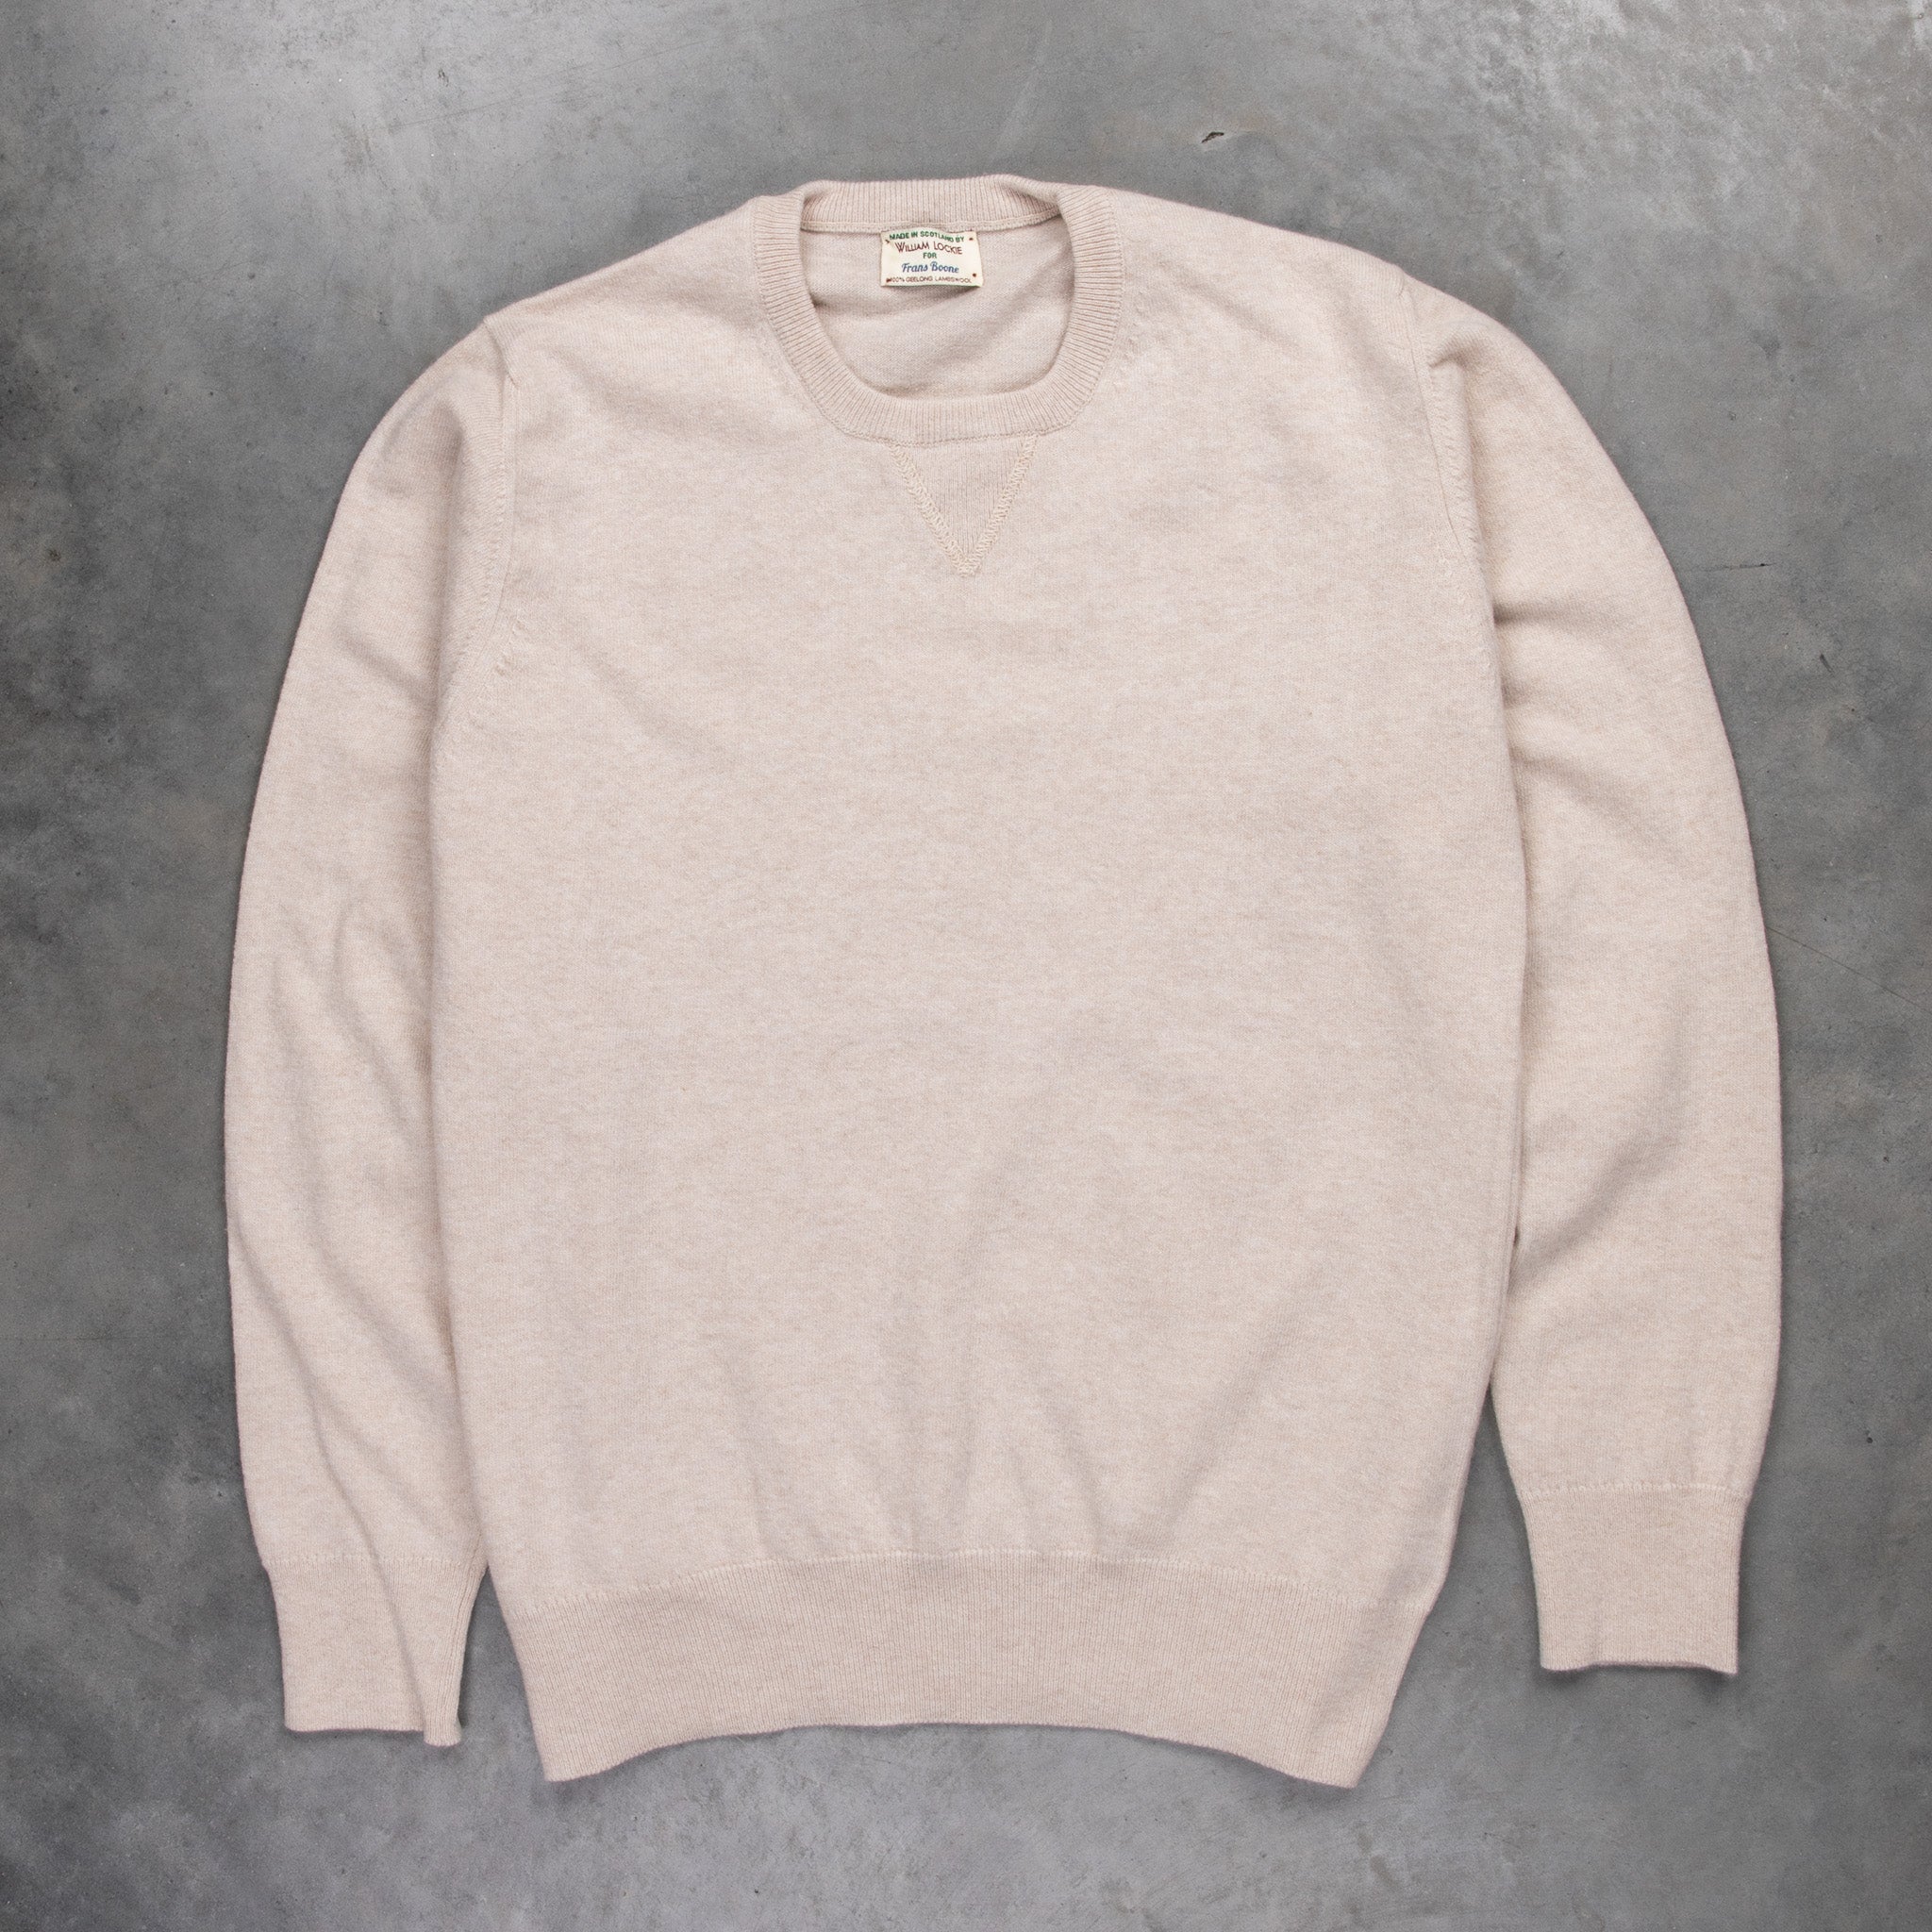 William Lockie x Frans Boone Super Geelong Vintage fit sweater Swansdown